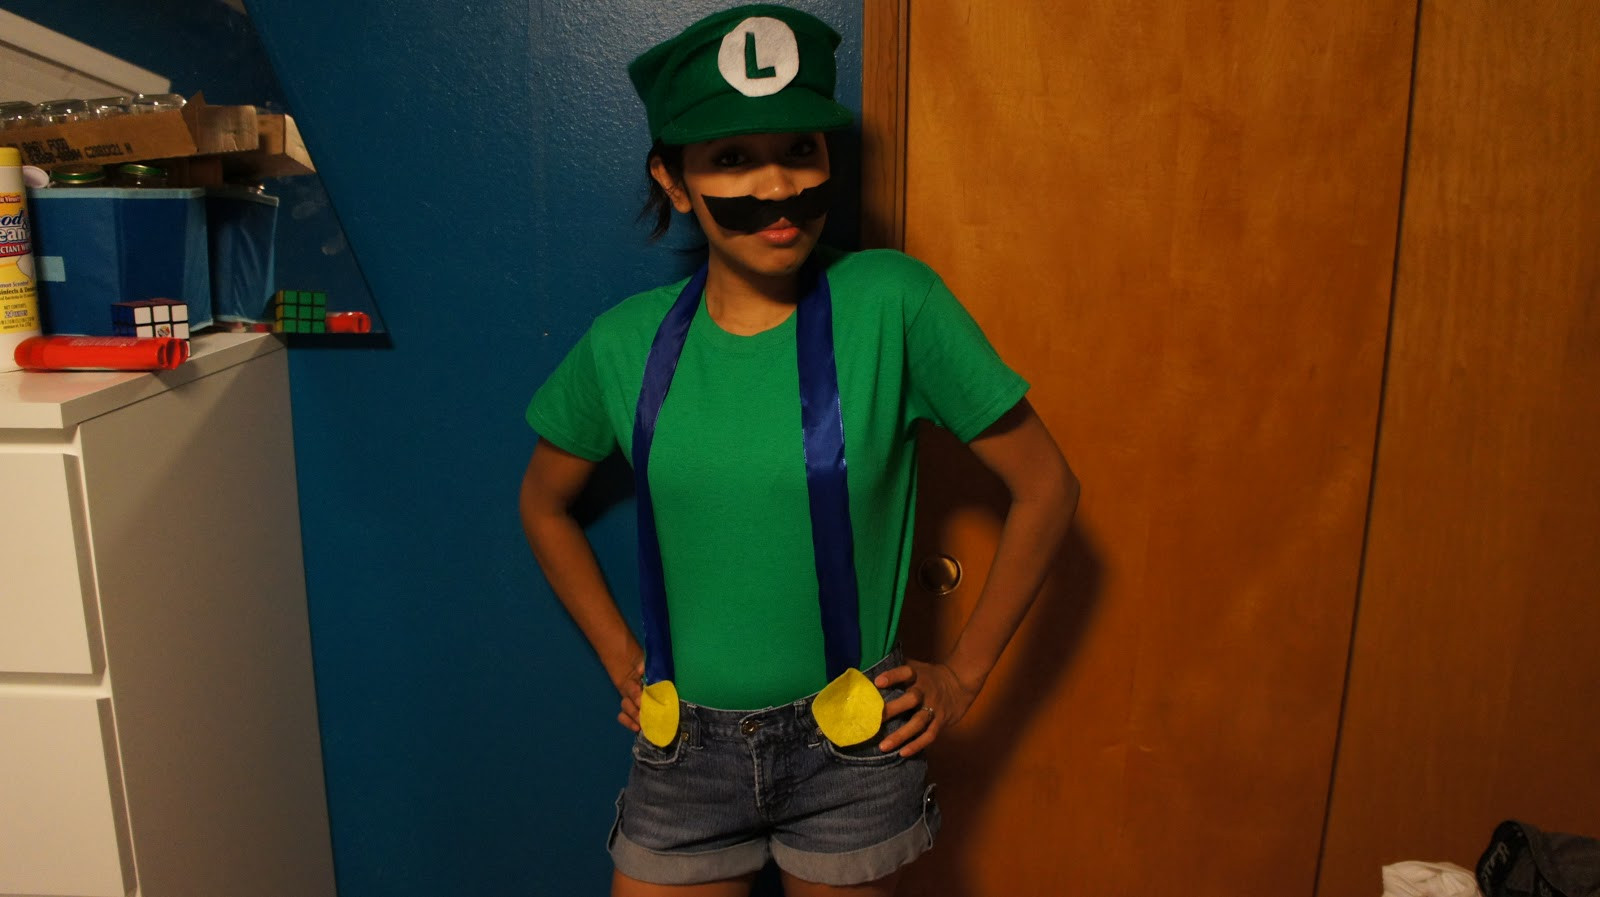 Best ideas about DIY Mario Costume
. Save or Pin DIY Mario & Luigi Costumes Now.